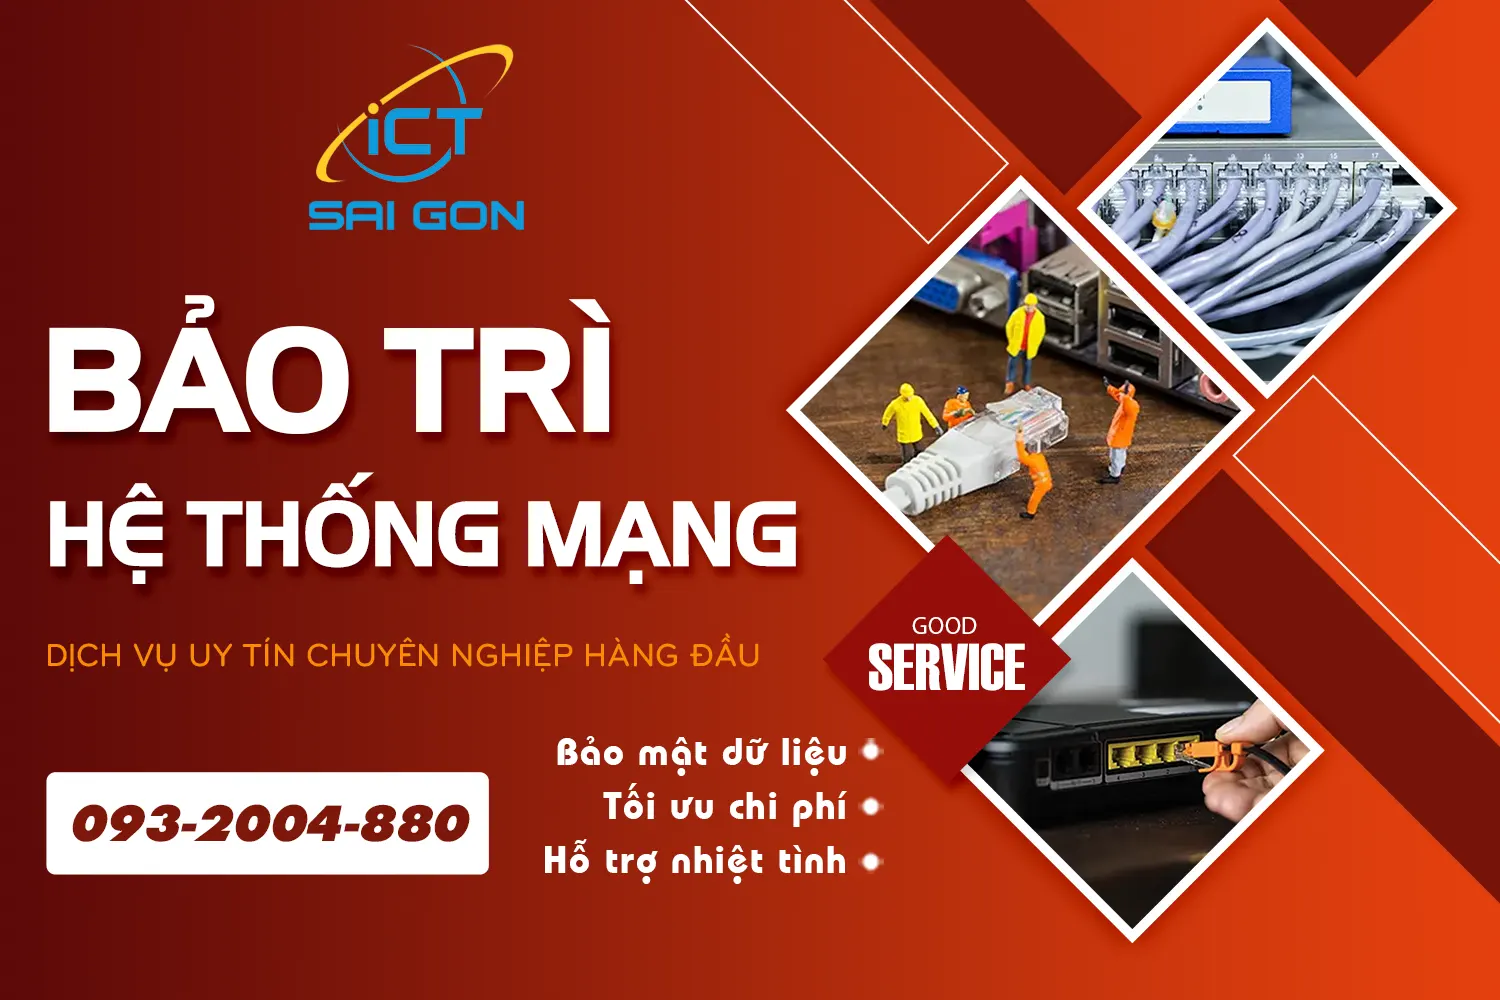 Bao Tri He Thong Mang Ictsaigon Banner 01